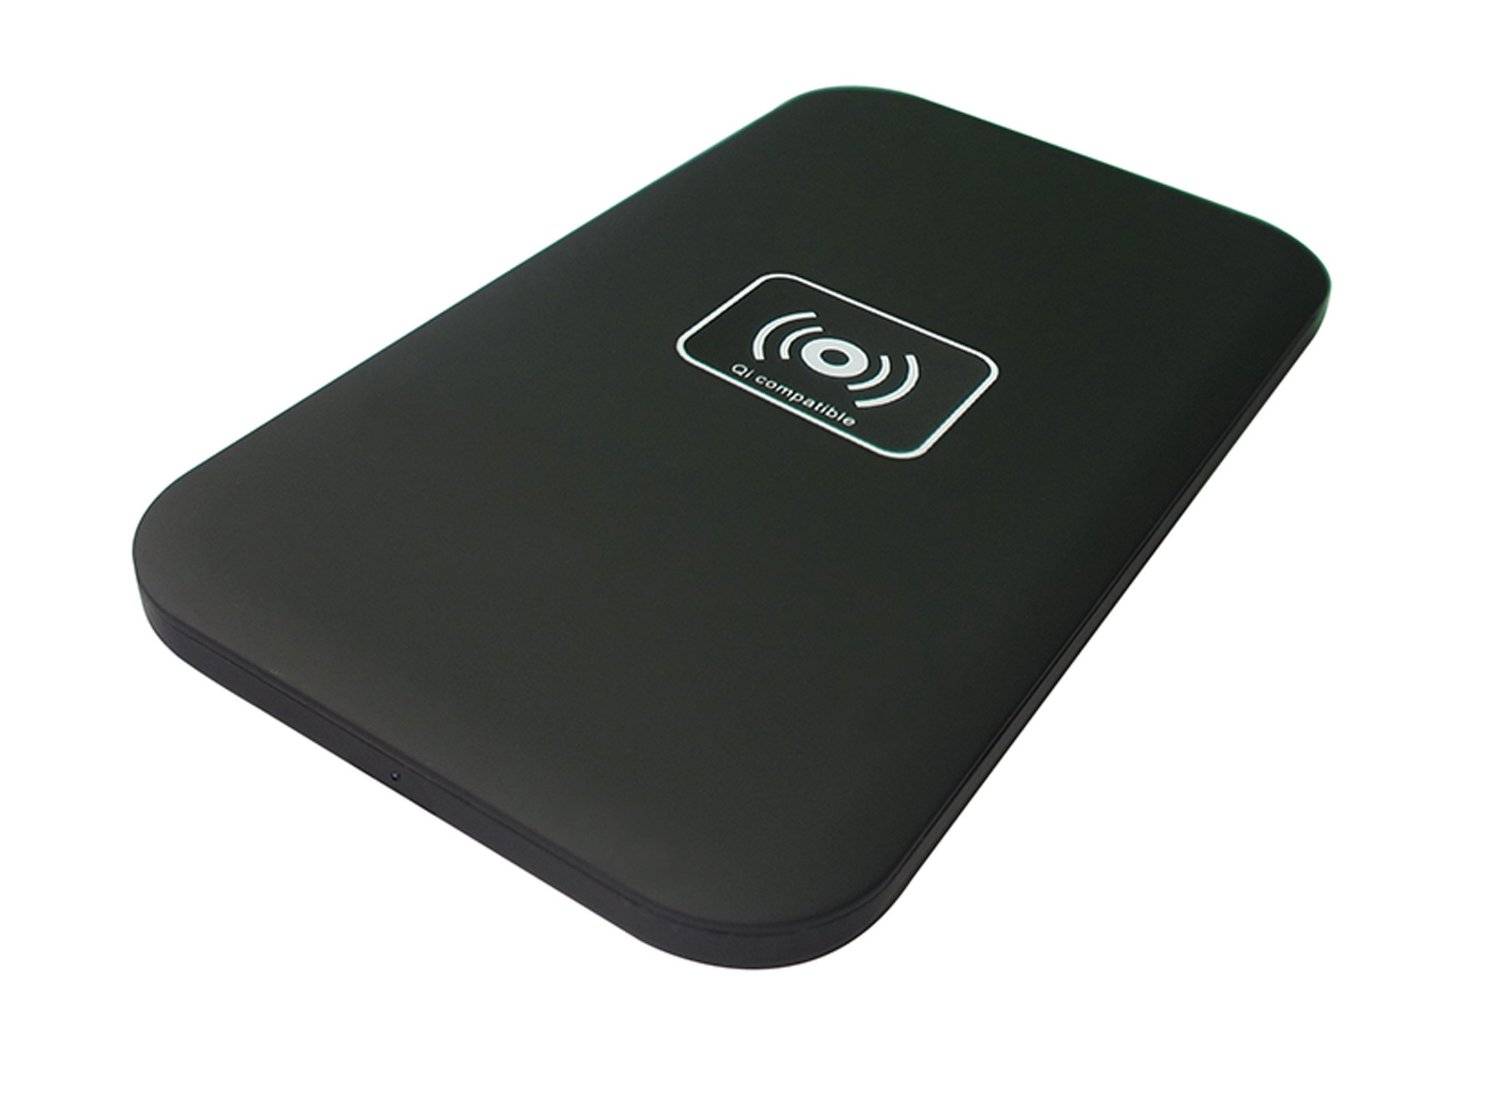 wireless charging pad, wireless charging, smartphone accessories, nexus 6 accessories, smartphone car mount, nexus 6